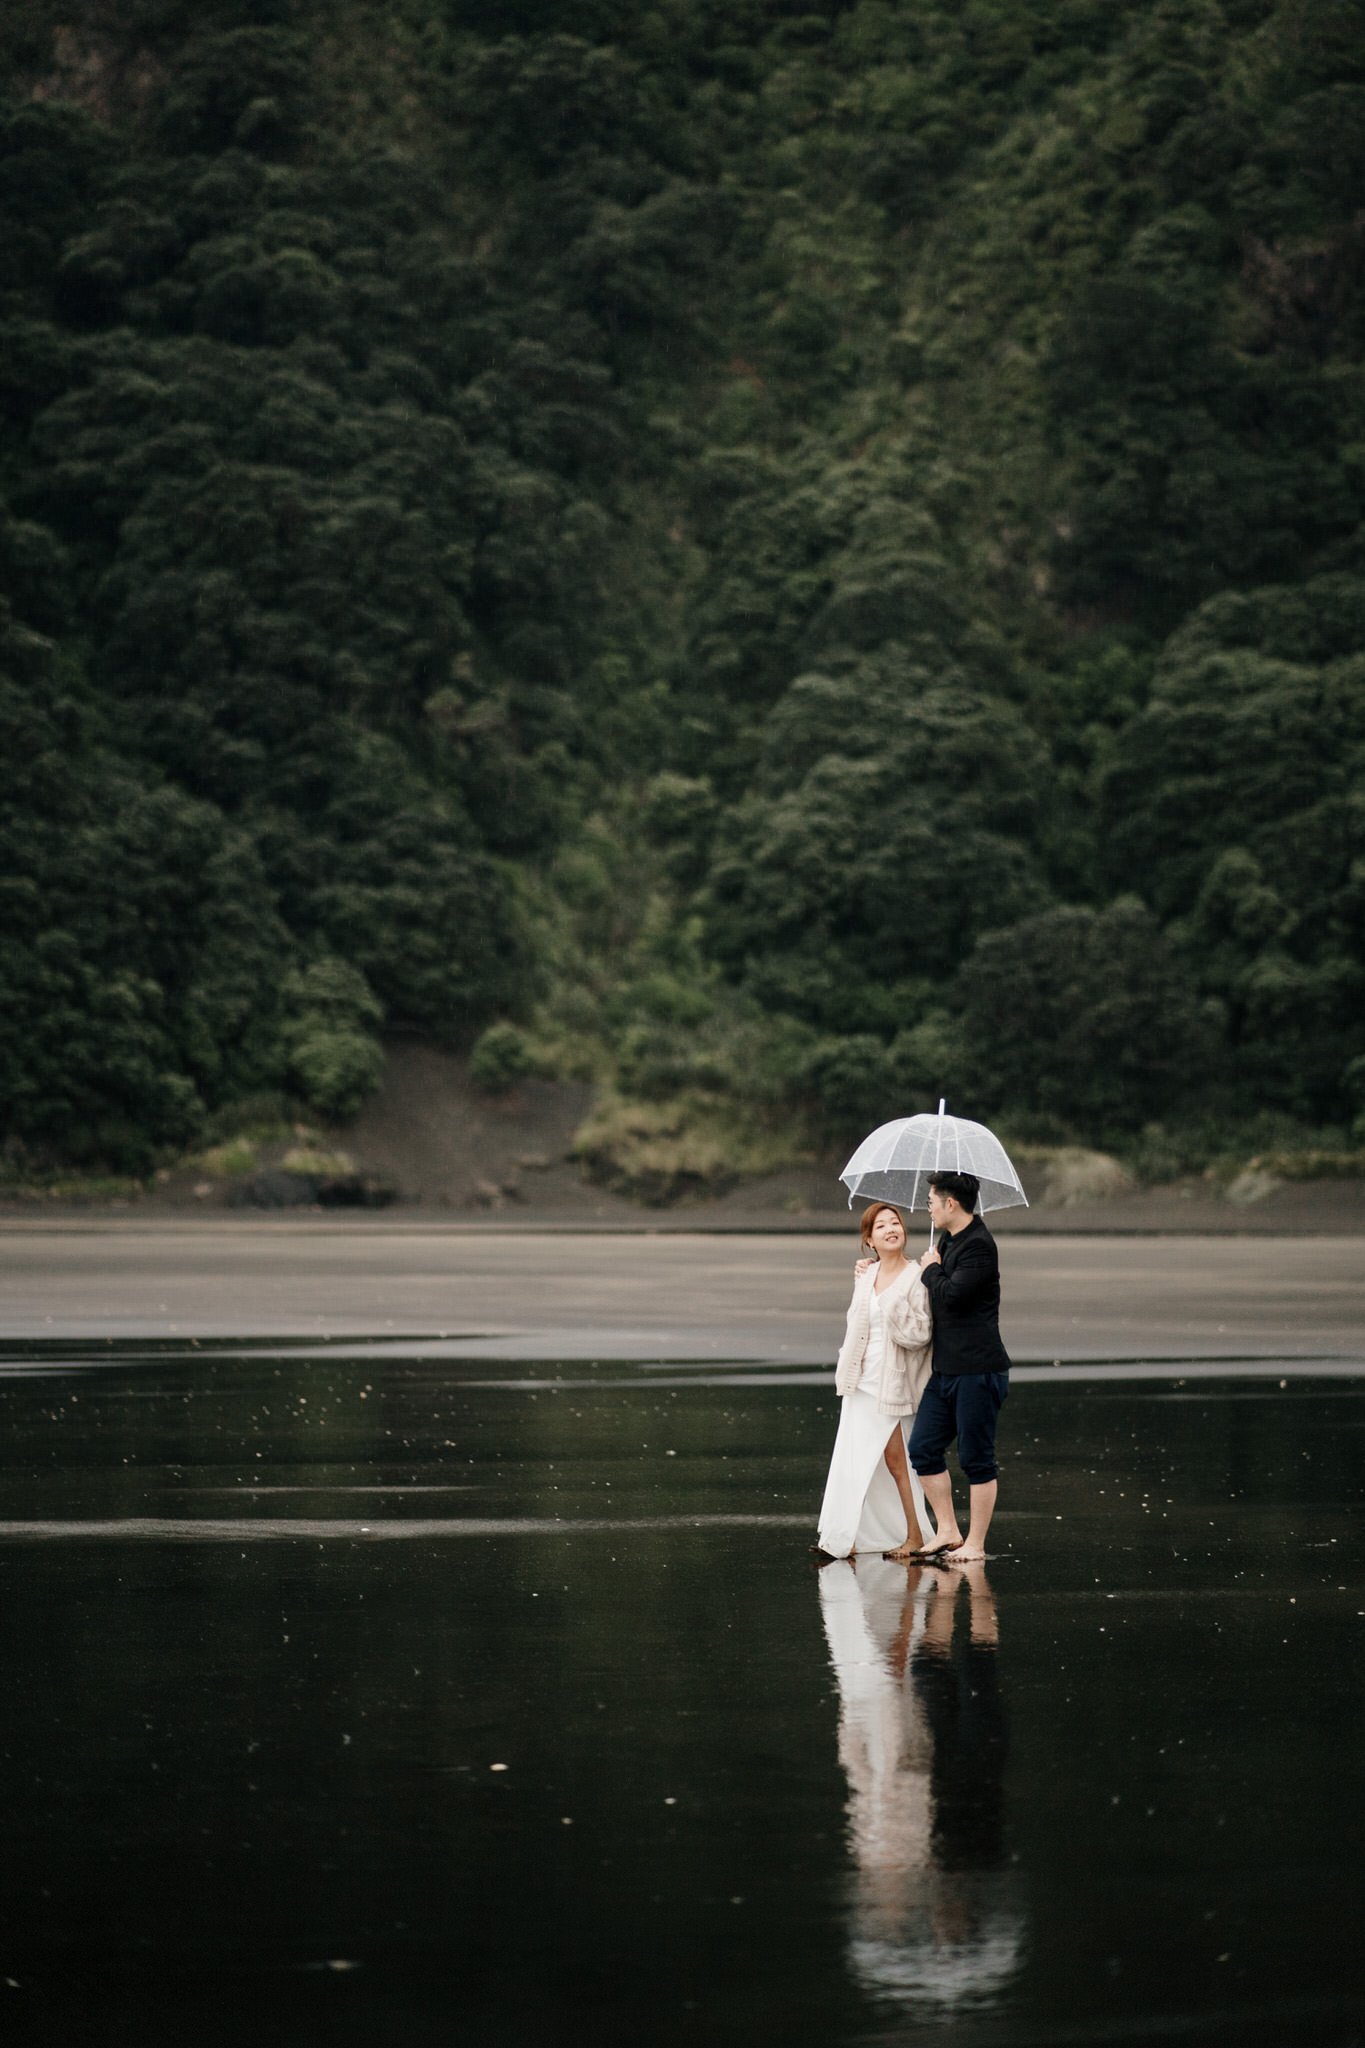 auckland-wedding-photographer-videographer-story-by-koo-koo's-jewelry-dear-white-productions-pre-wedding-engagement-photo-kare-karekare-falls-waterfall-beach-west-piha-muriwai-rain-night (48).JPG